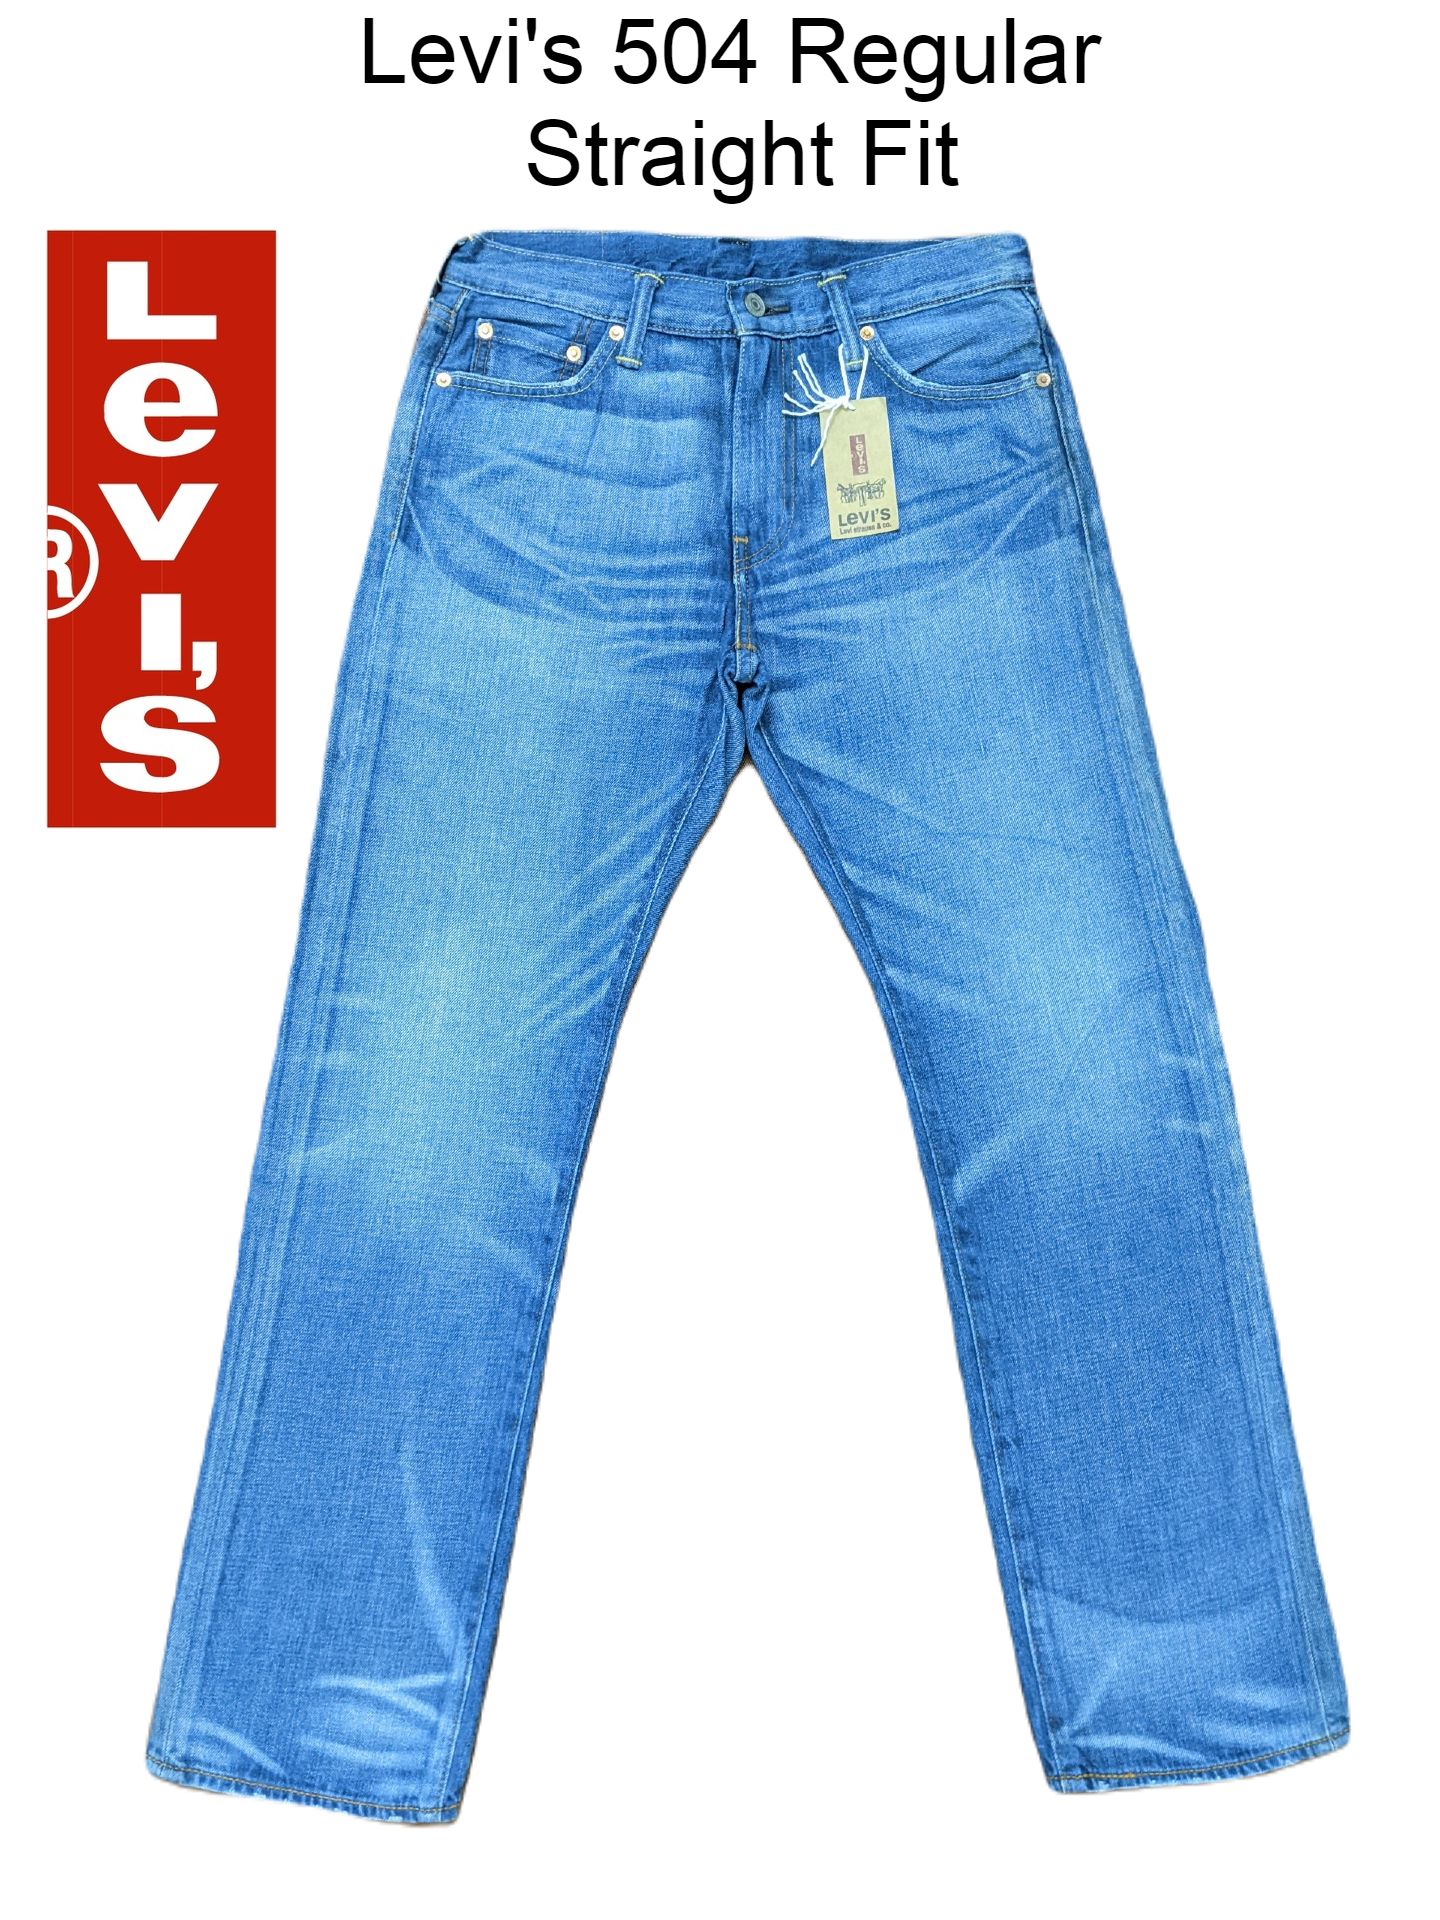 Quần jeans Nam Levi's 504 BIGSIZE Hàng HIệu 